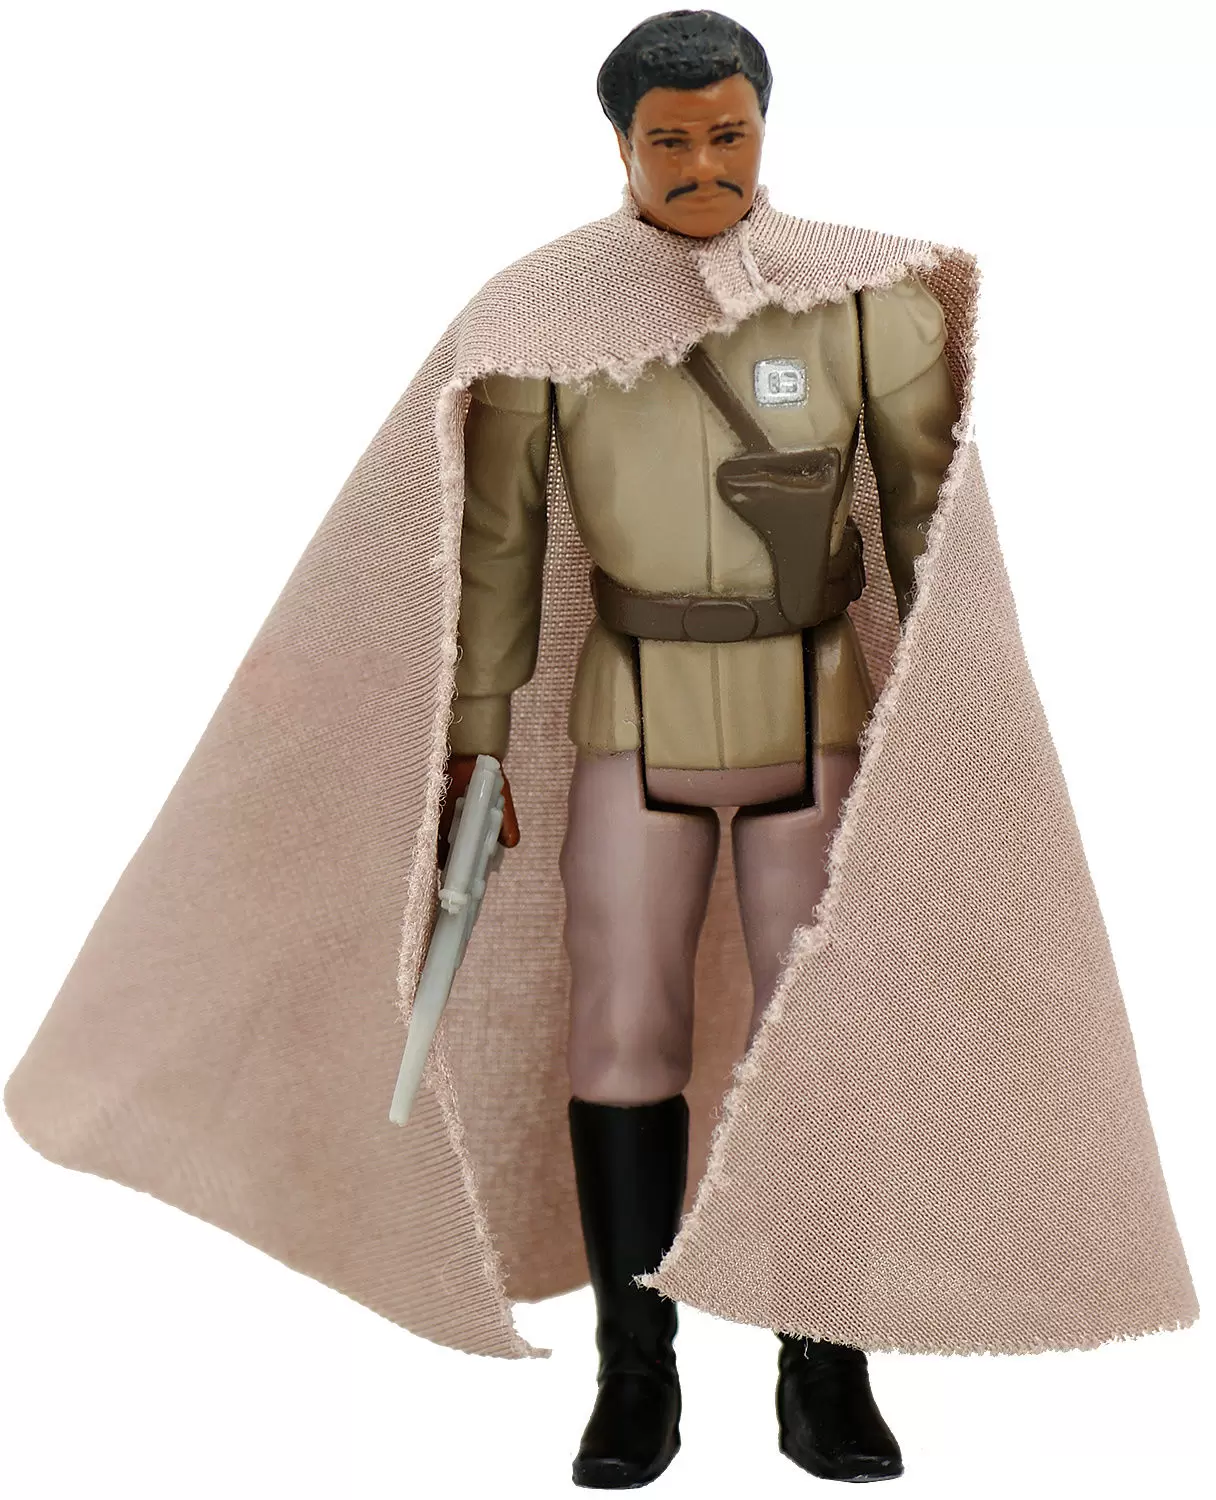 Kenner Vintage Star Wars - Lando Calrissian General